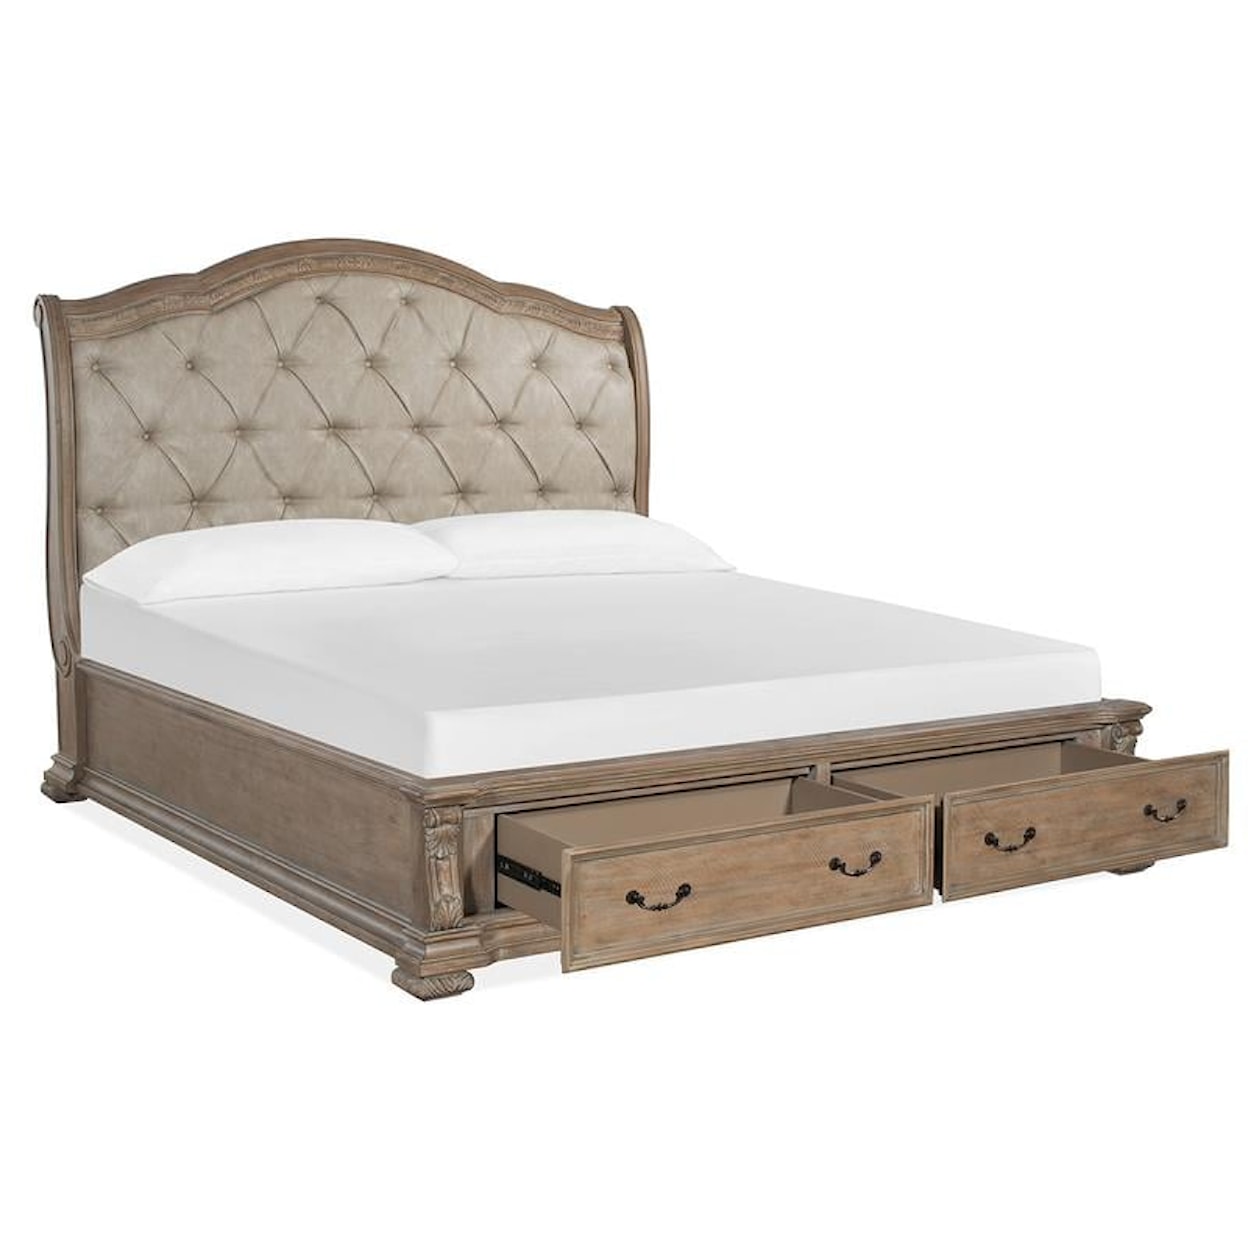 Magnussen Home Marisol Bedroom California King Upholstered Sleigh Bed